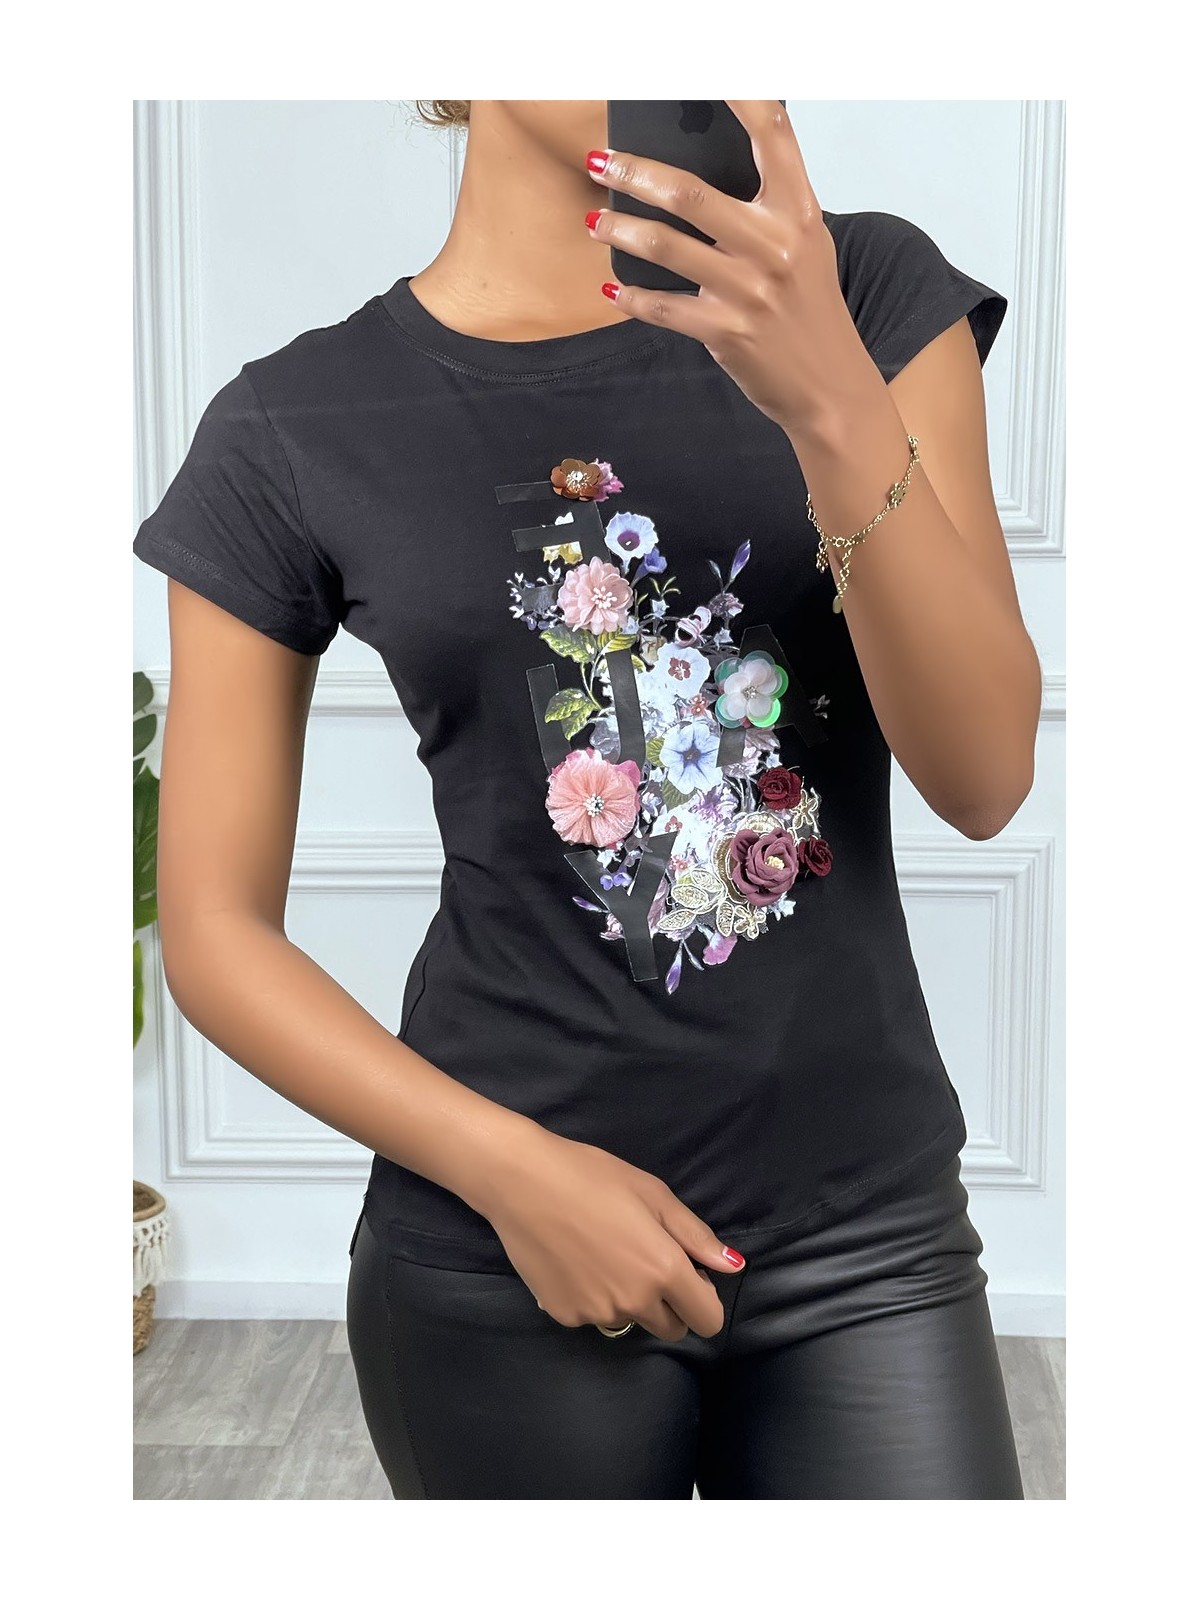 Tee-shirt noir à motif fleuri et en relief